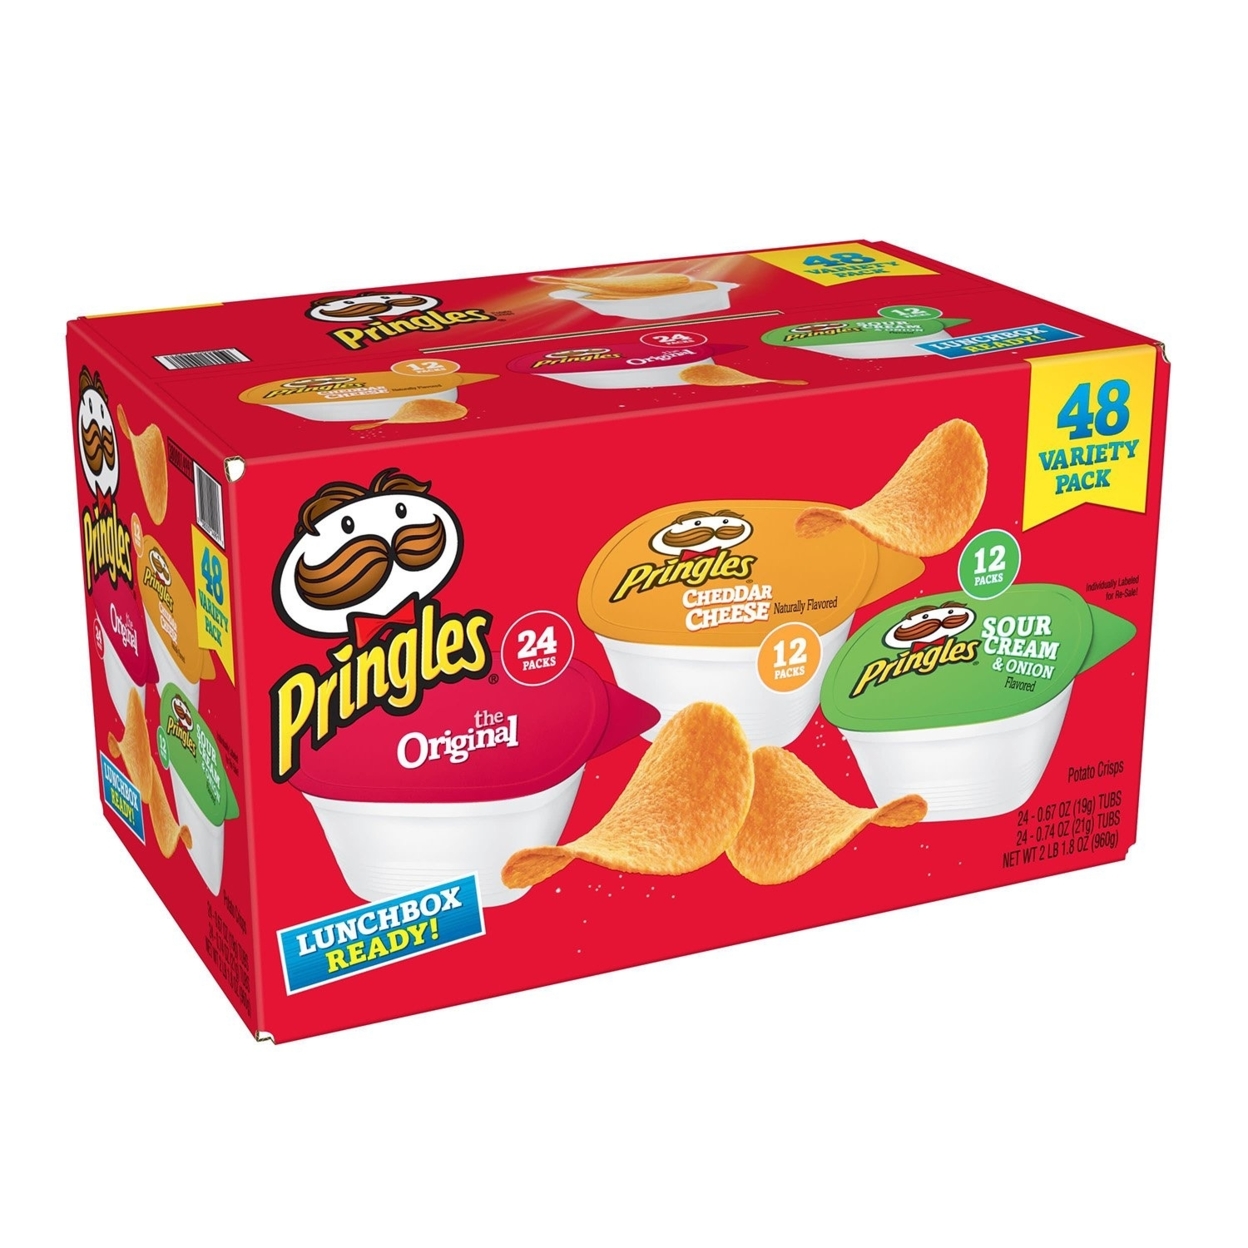 Pringles Snack Stacks Variety Pack (48 Count)